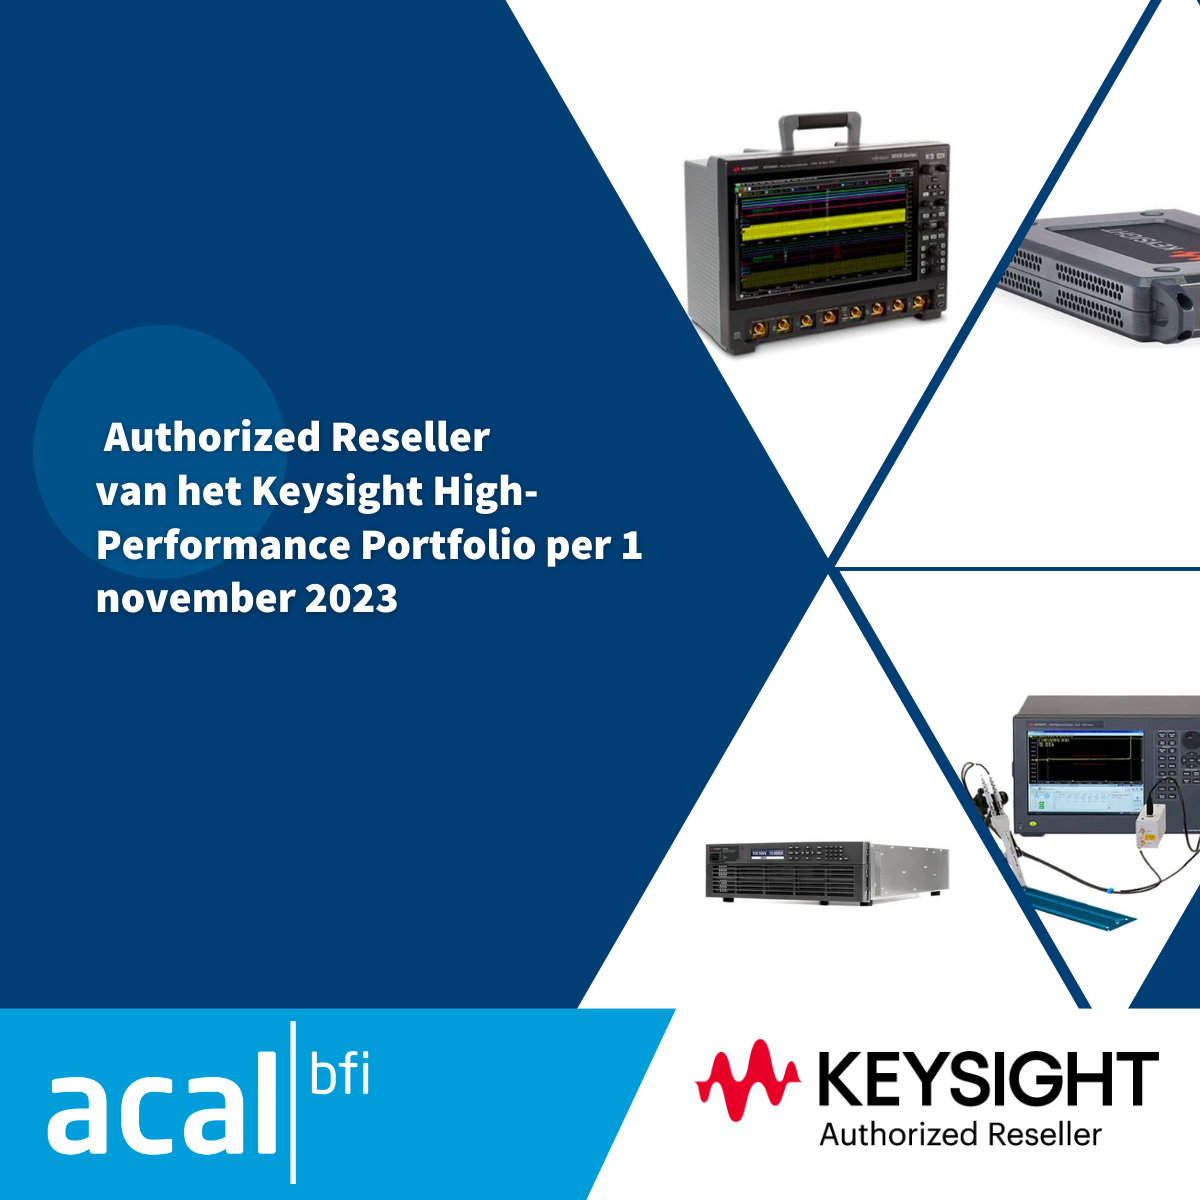 Acal BFi Benelux officieel Authorized Reseller van het Keysight High-Performance Portfolio per 1 november 2023